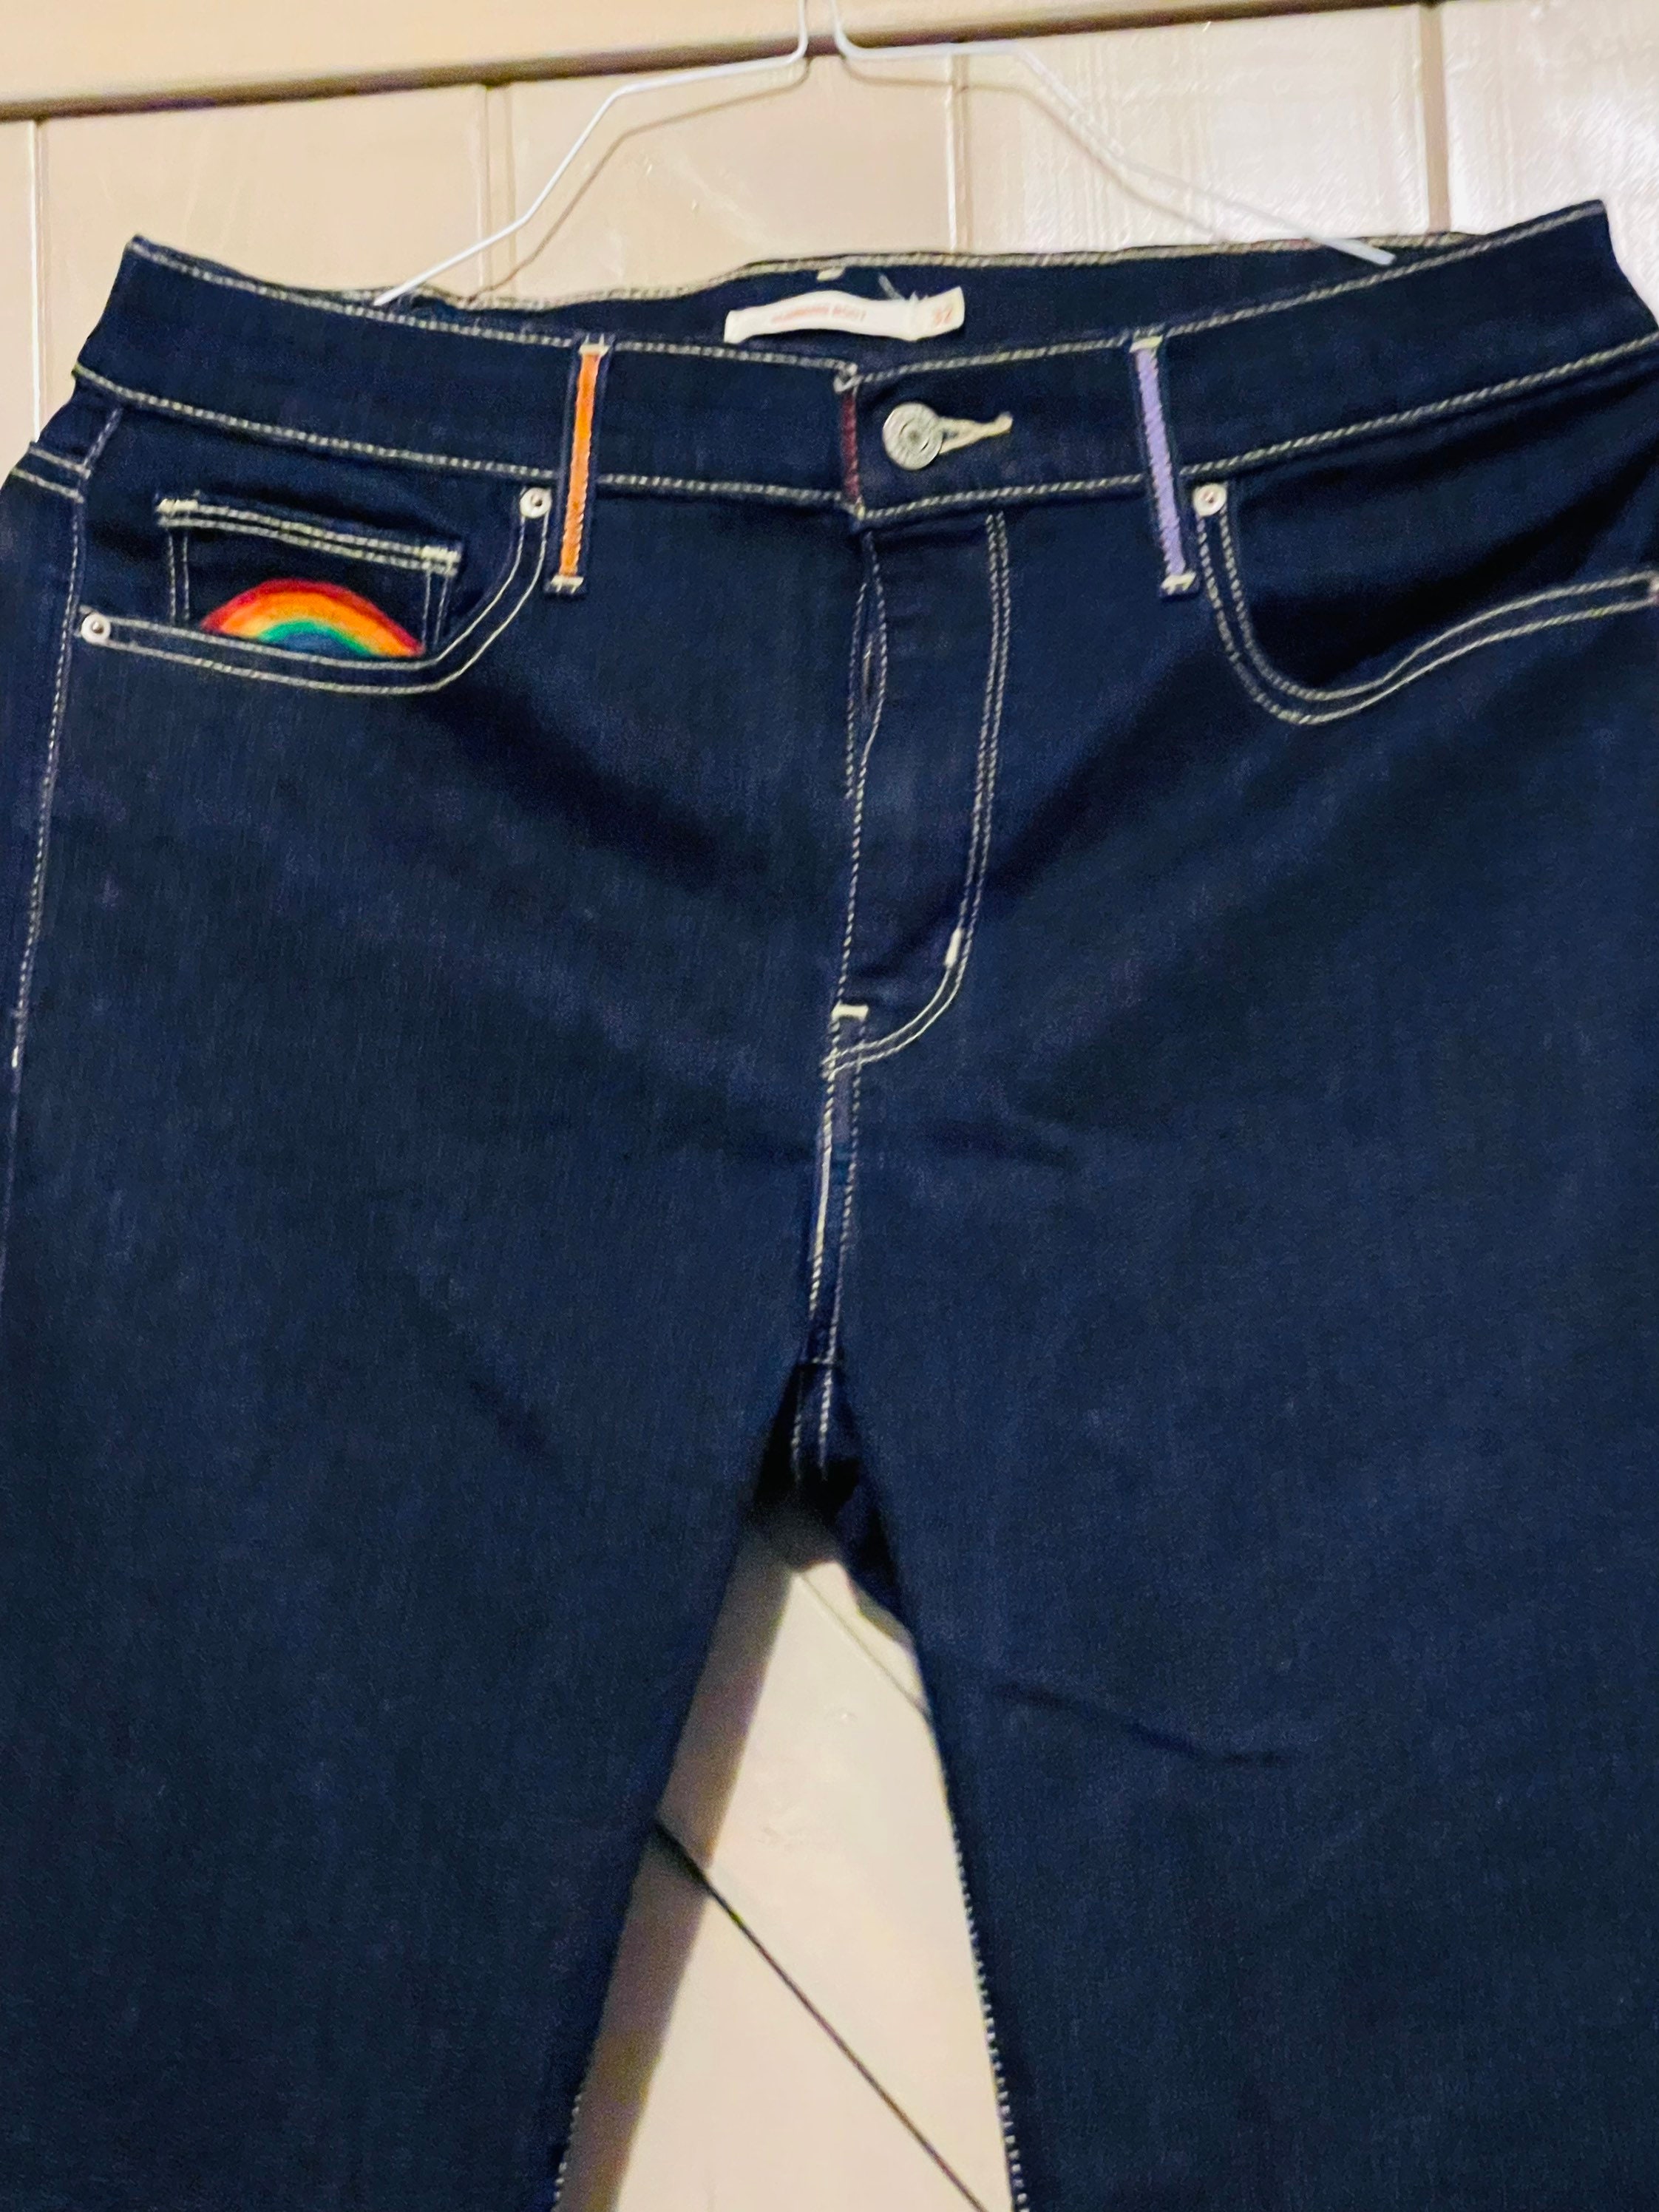 Rainbow Jeans Levis Strauss & Co LGBTQ Do You Listen to Girl - Etsy  Australia